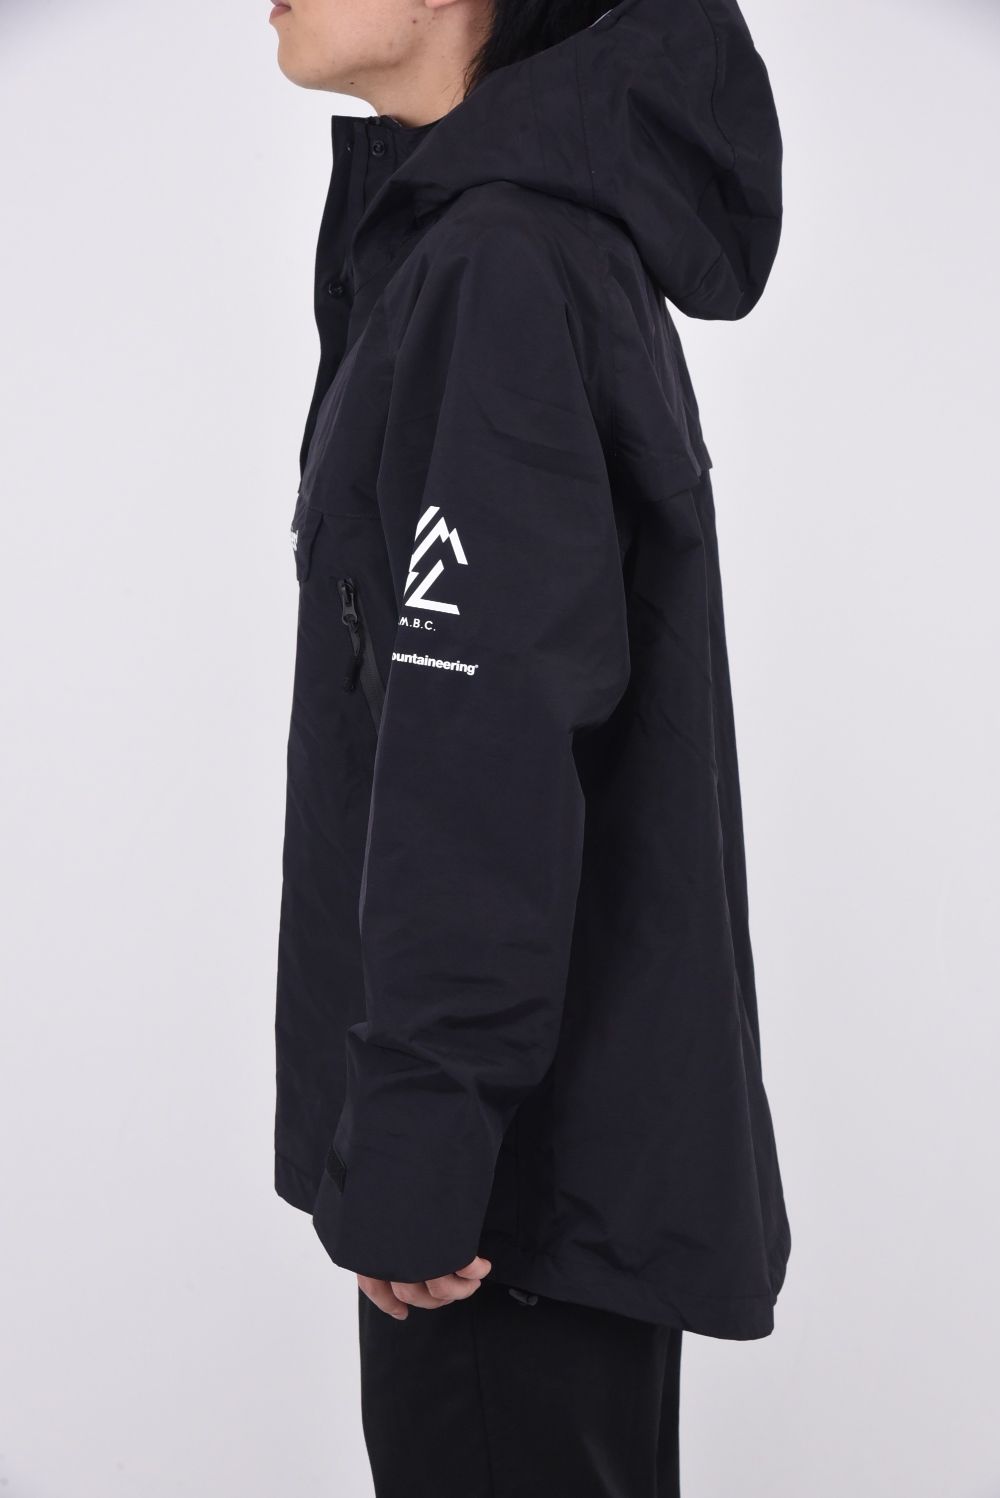 ANORAK RAIN JACKET / KiU別注 アノラック型 レインジャケット ブラック - フリーサイズ